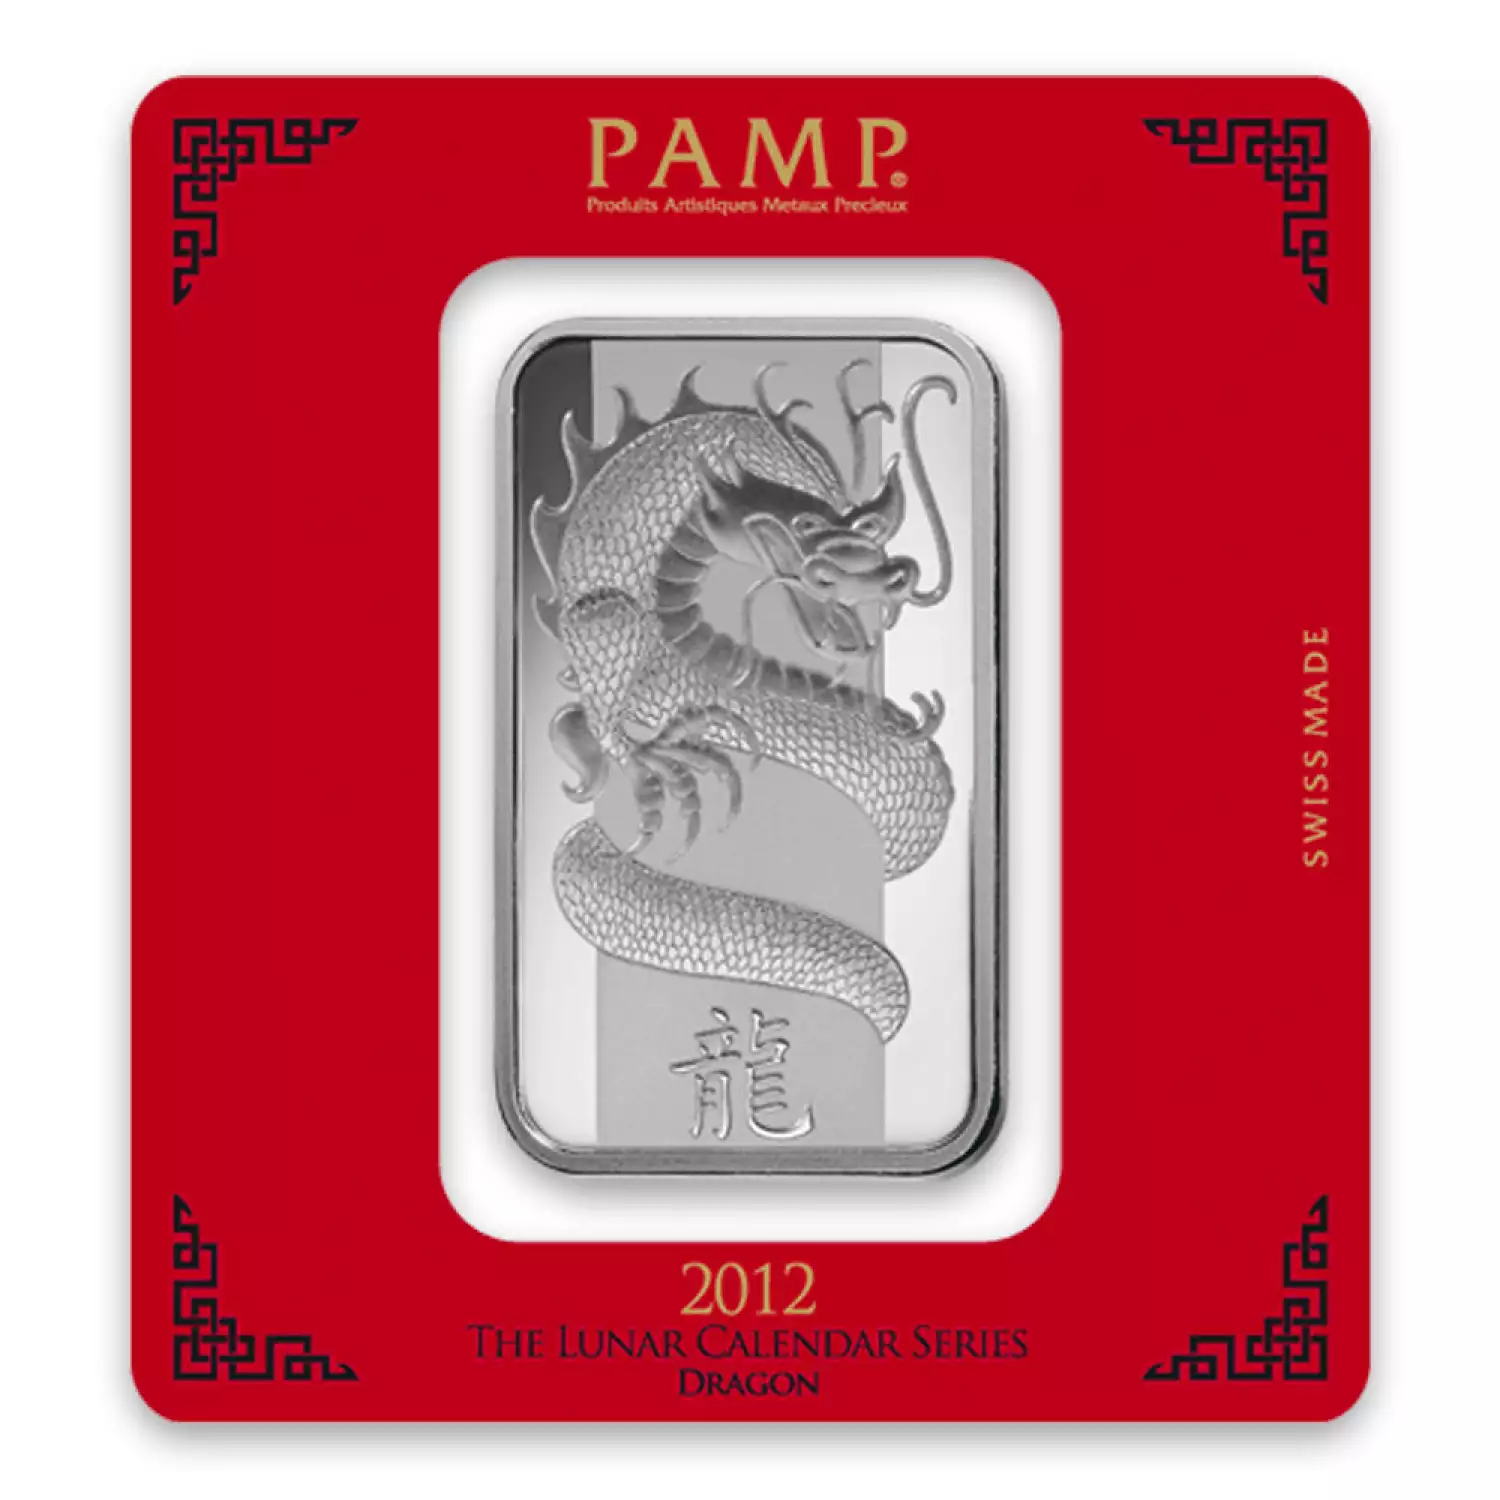 100g PAMP Silver Bar - Lunar Dragon (3)